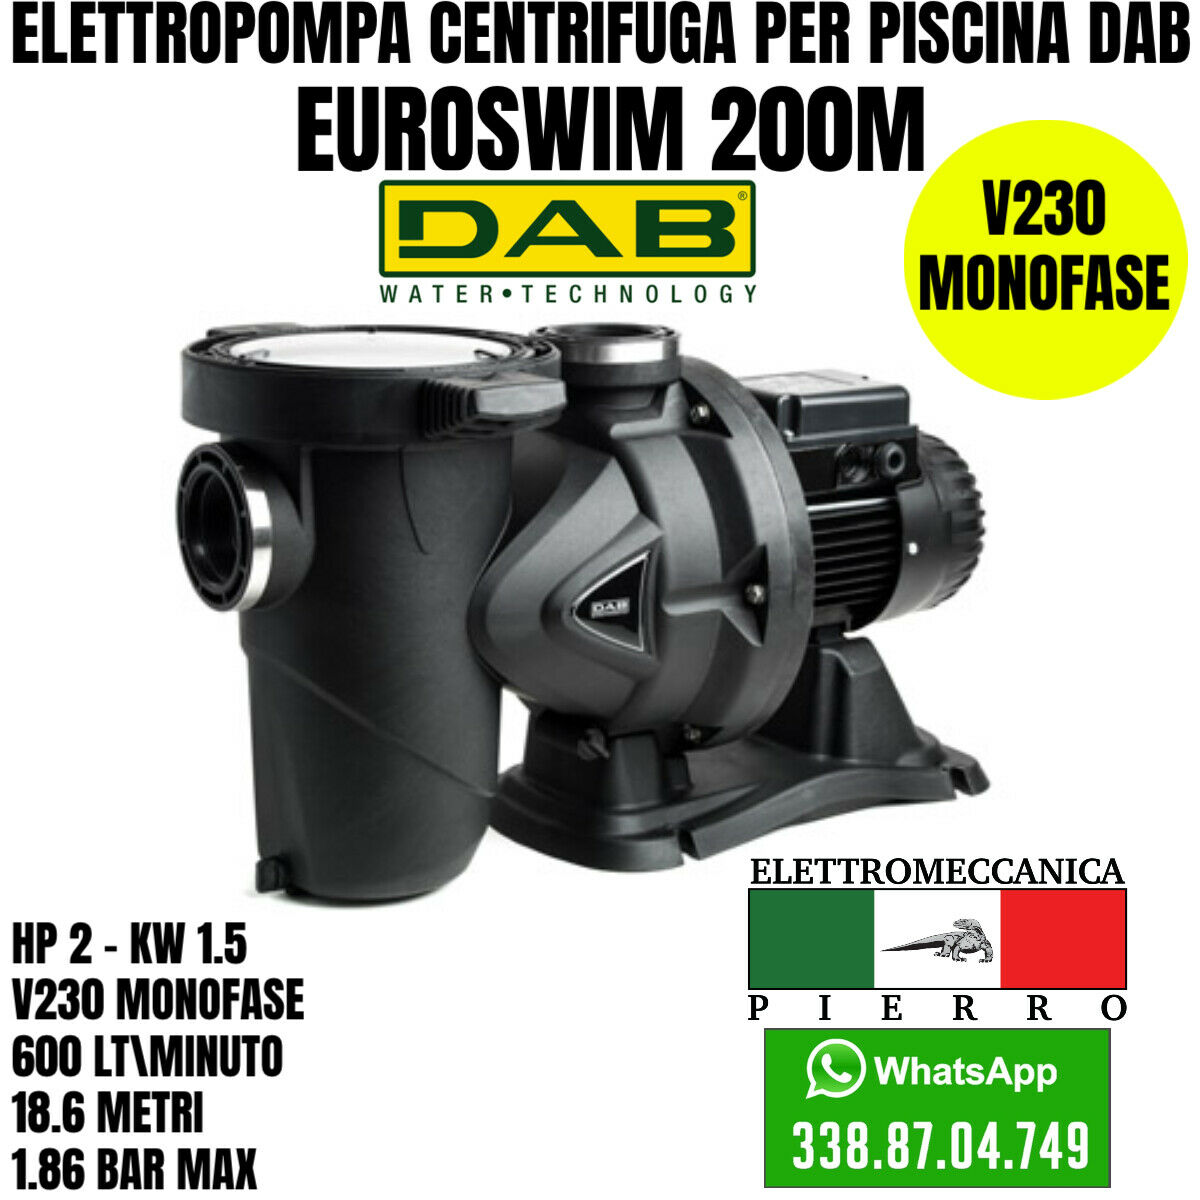 Pompa per piscina DAB EuroSwim EuroPro Elettropompa centrifuga piscine HP 0/3 Logo Elettromeccanica Pierro Elettromeccanica Express Assistenza EuroSwim 200M Hp 2 - KW 1.5 600LT/Minuto 18,6 Metri 1,86 BAR MAX V230